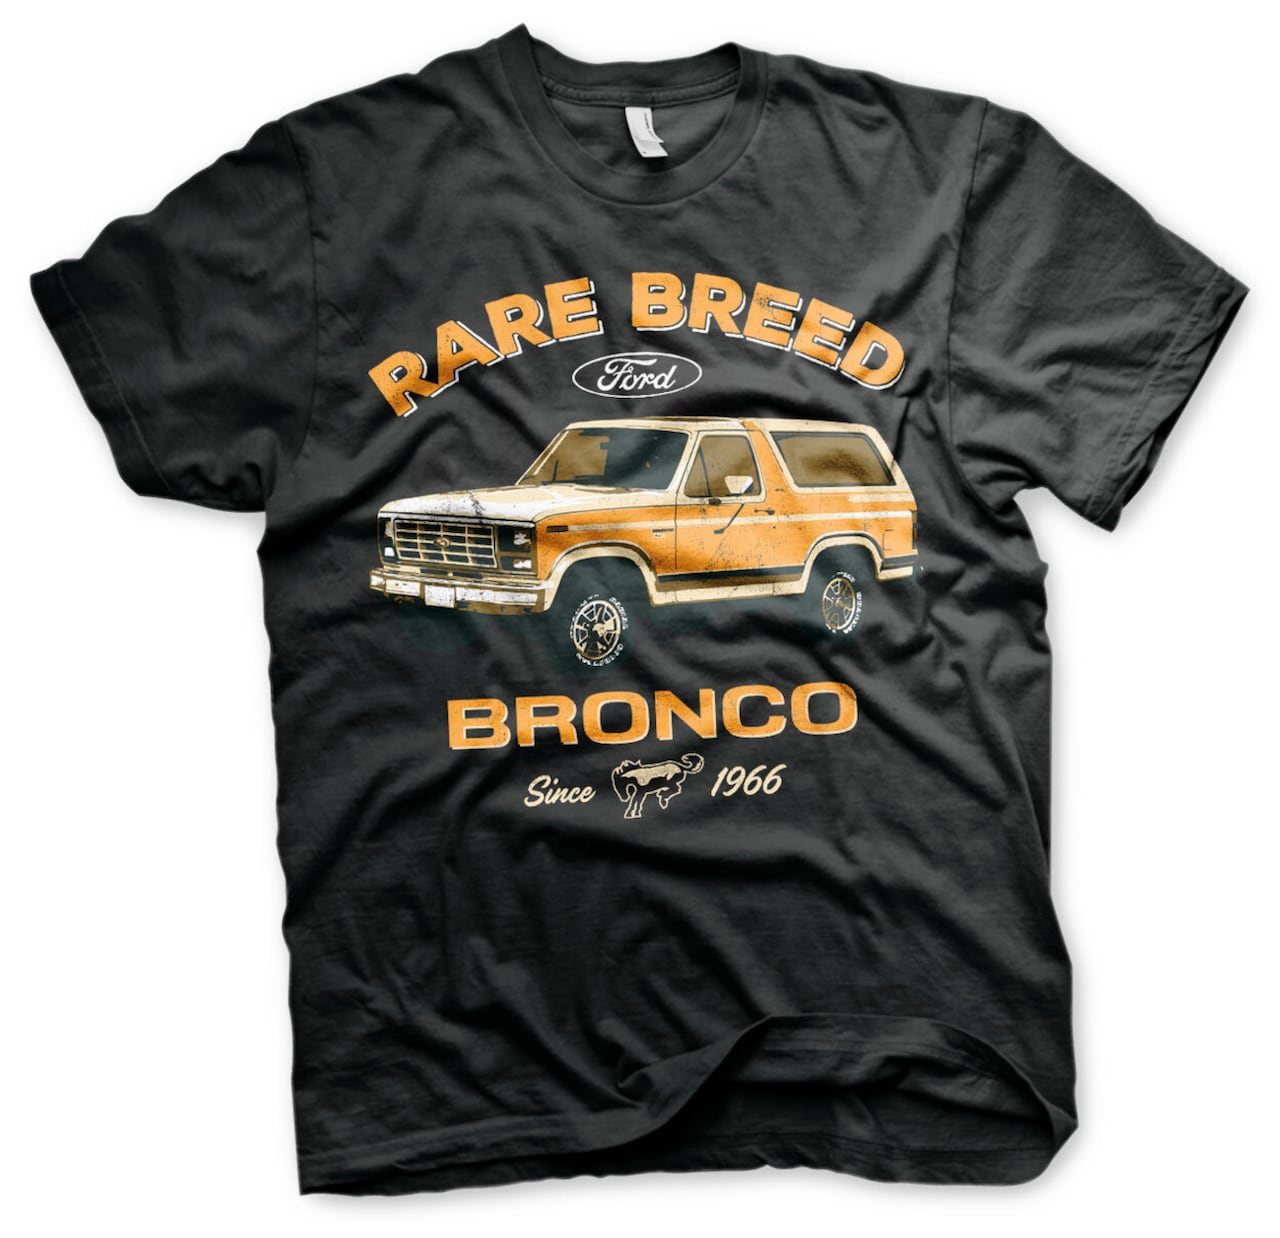 Ford Bronco - Rare Breed T-Shirt, Sort, XL